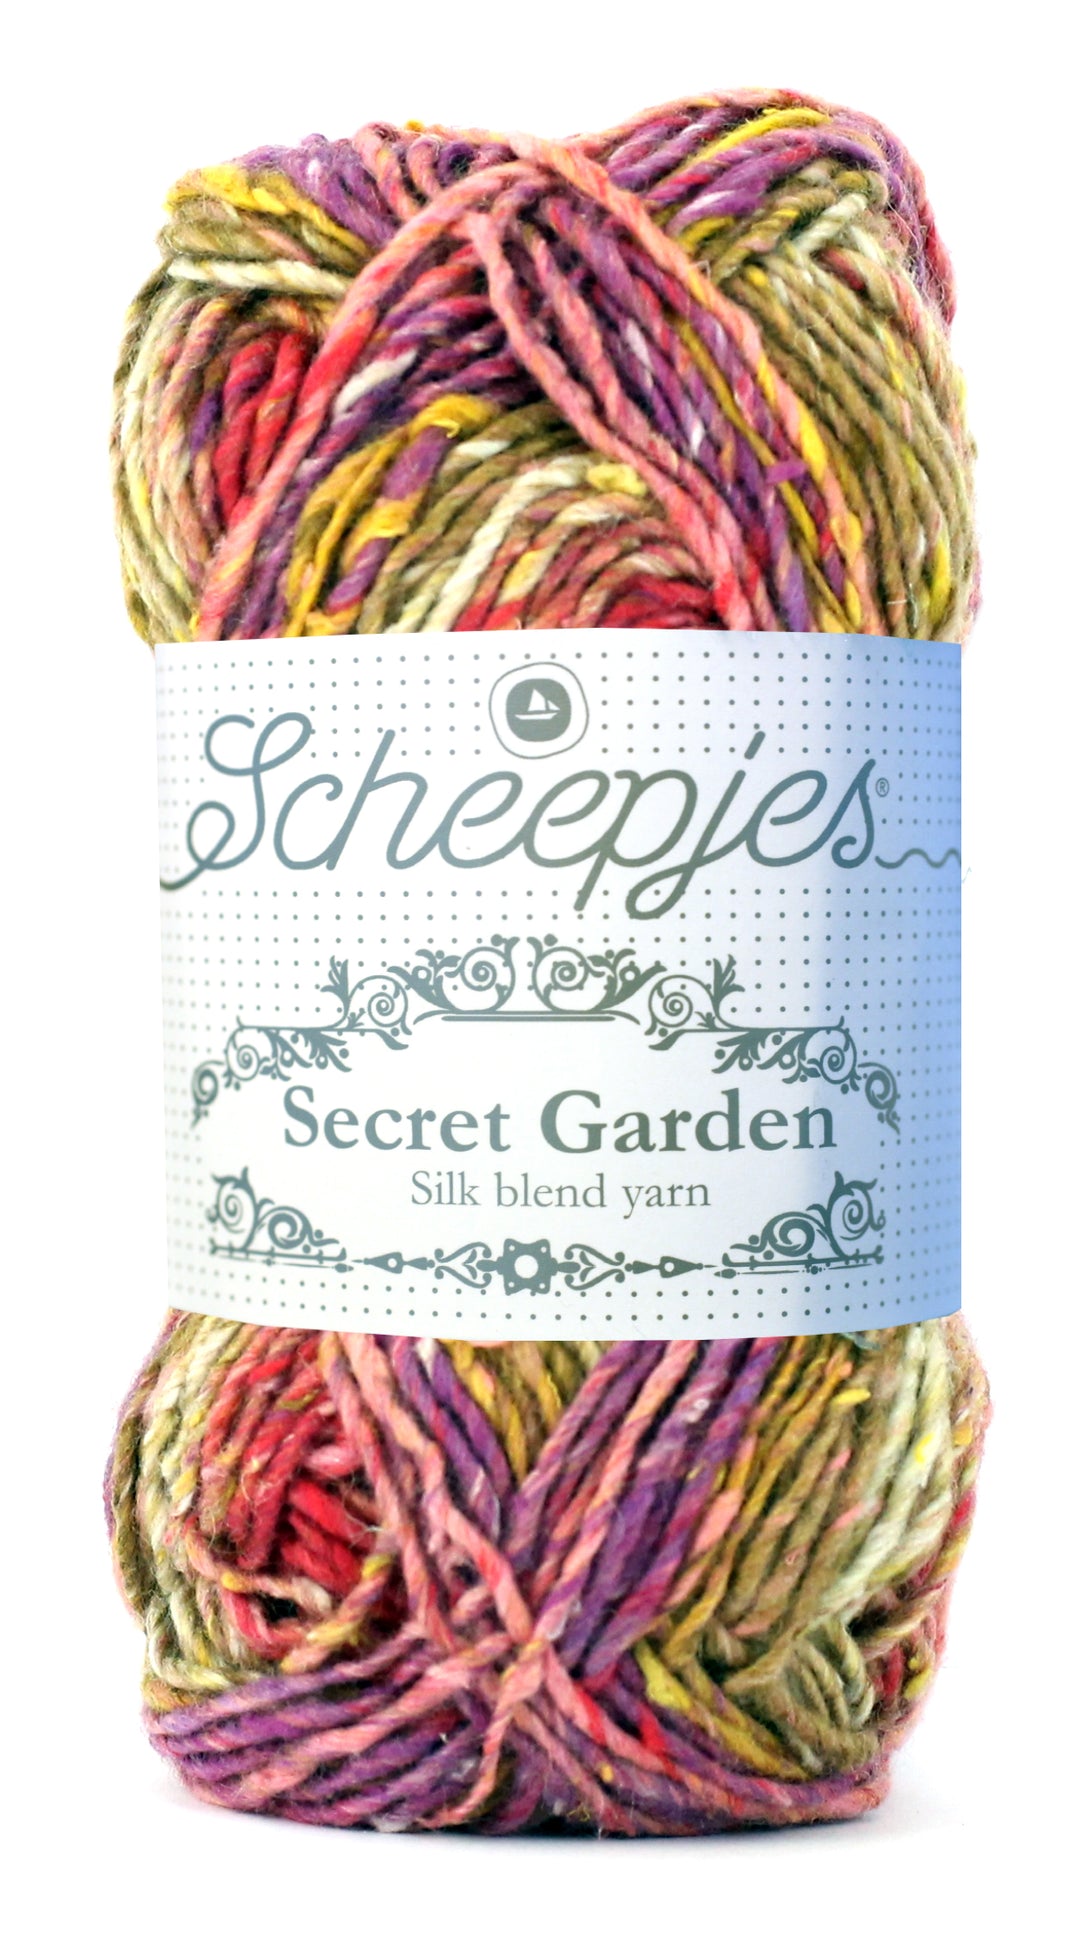 Scheepjes Secret Garden - Mossy Cable Scarf Yarn Pack by Carmen Jorissen